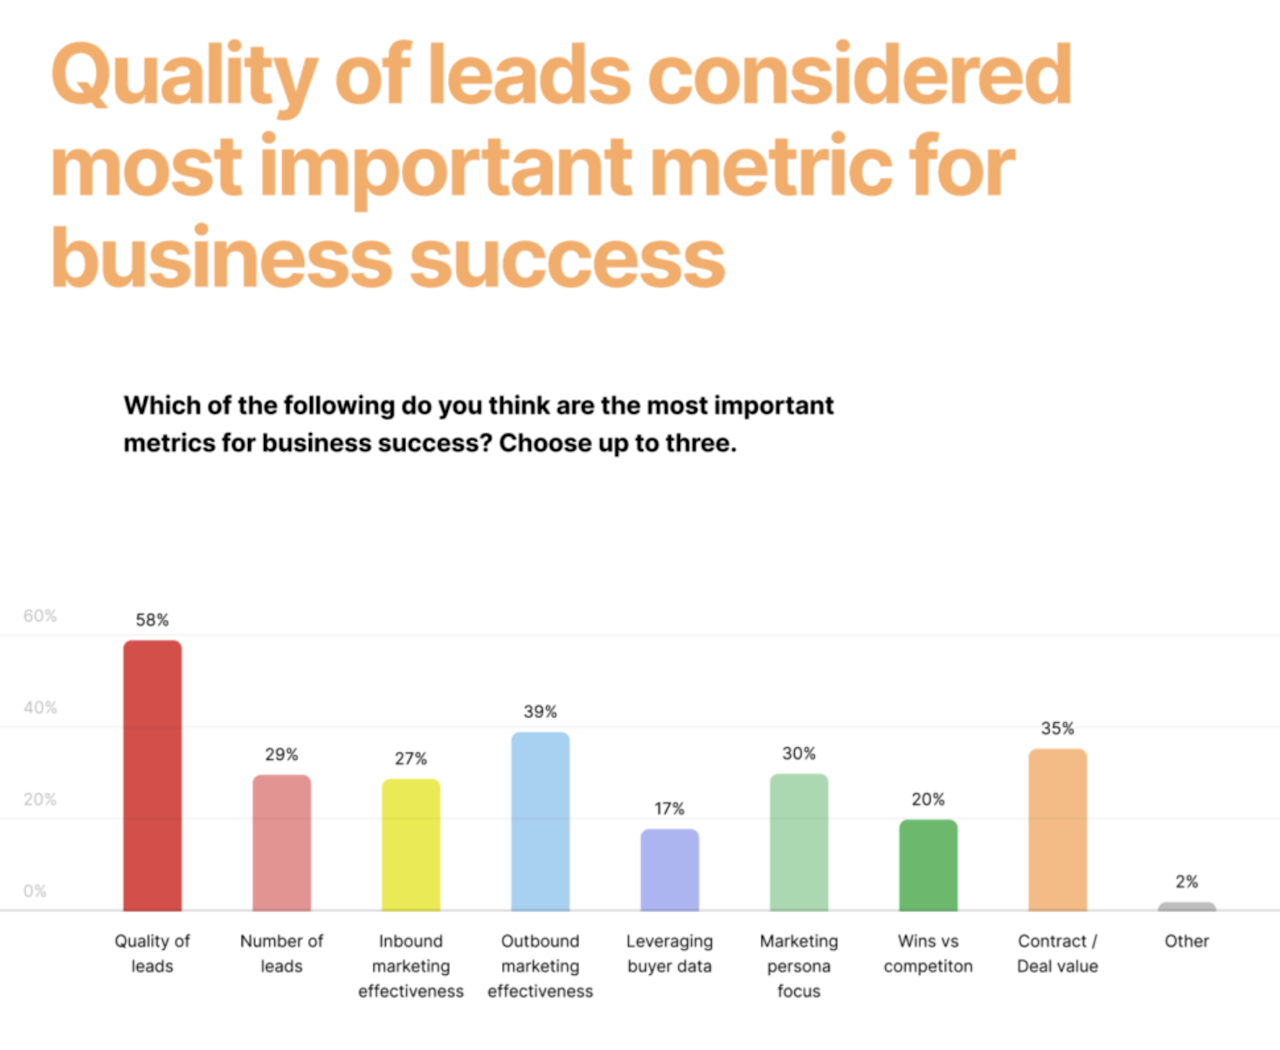 B2B lead database: Quality of leads